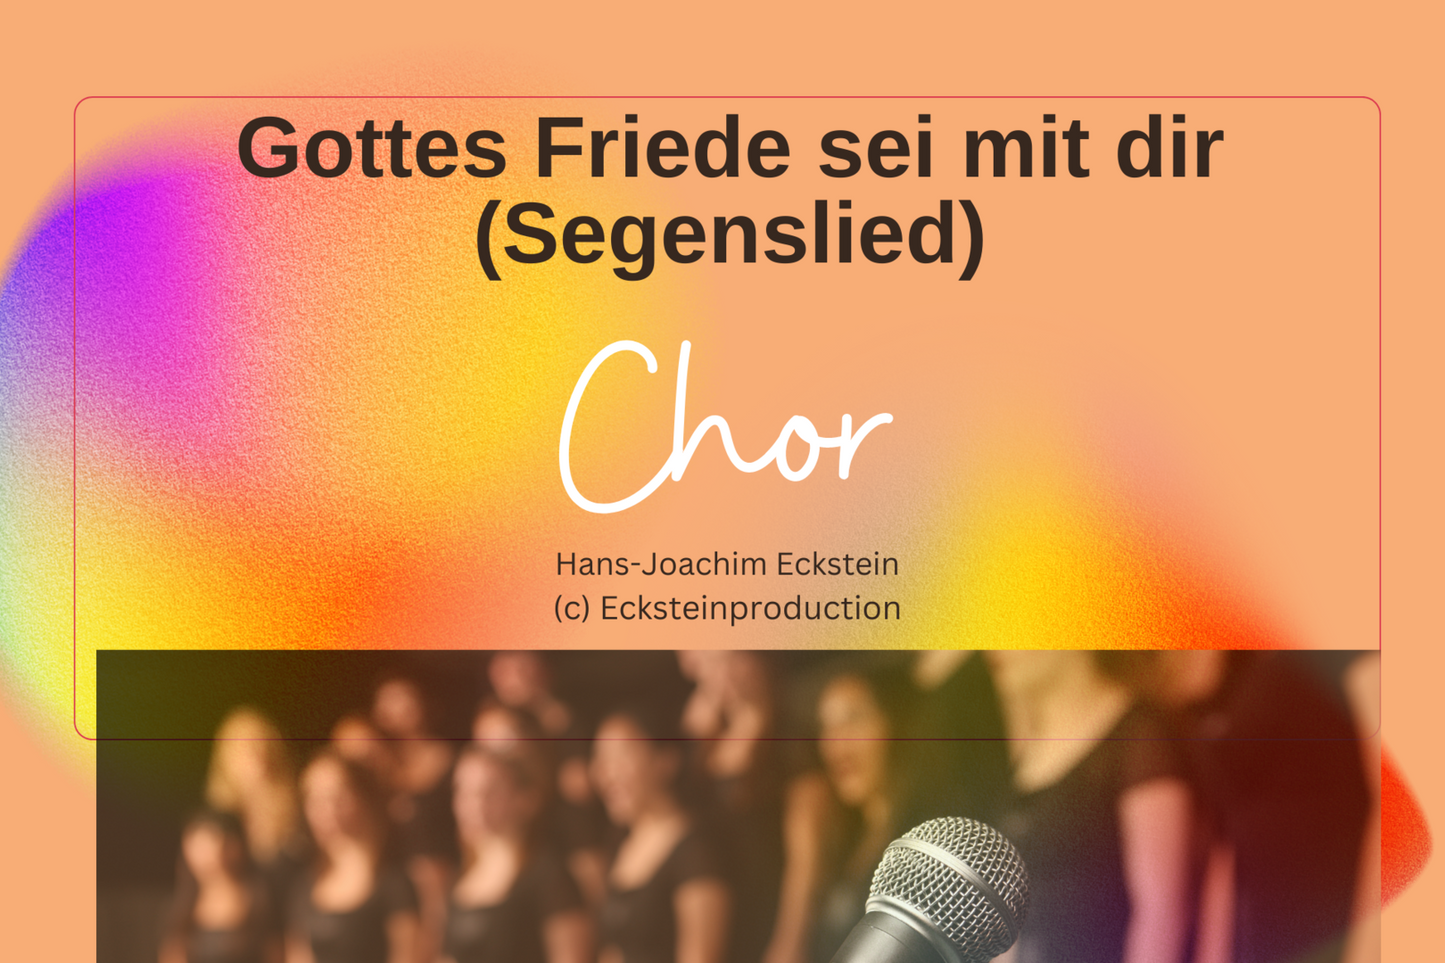 Gottes Friede - Segenslied (Chor) Hans-Joachim Eckstein